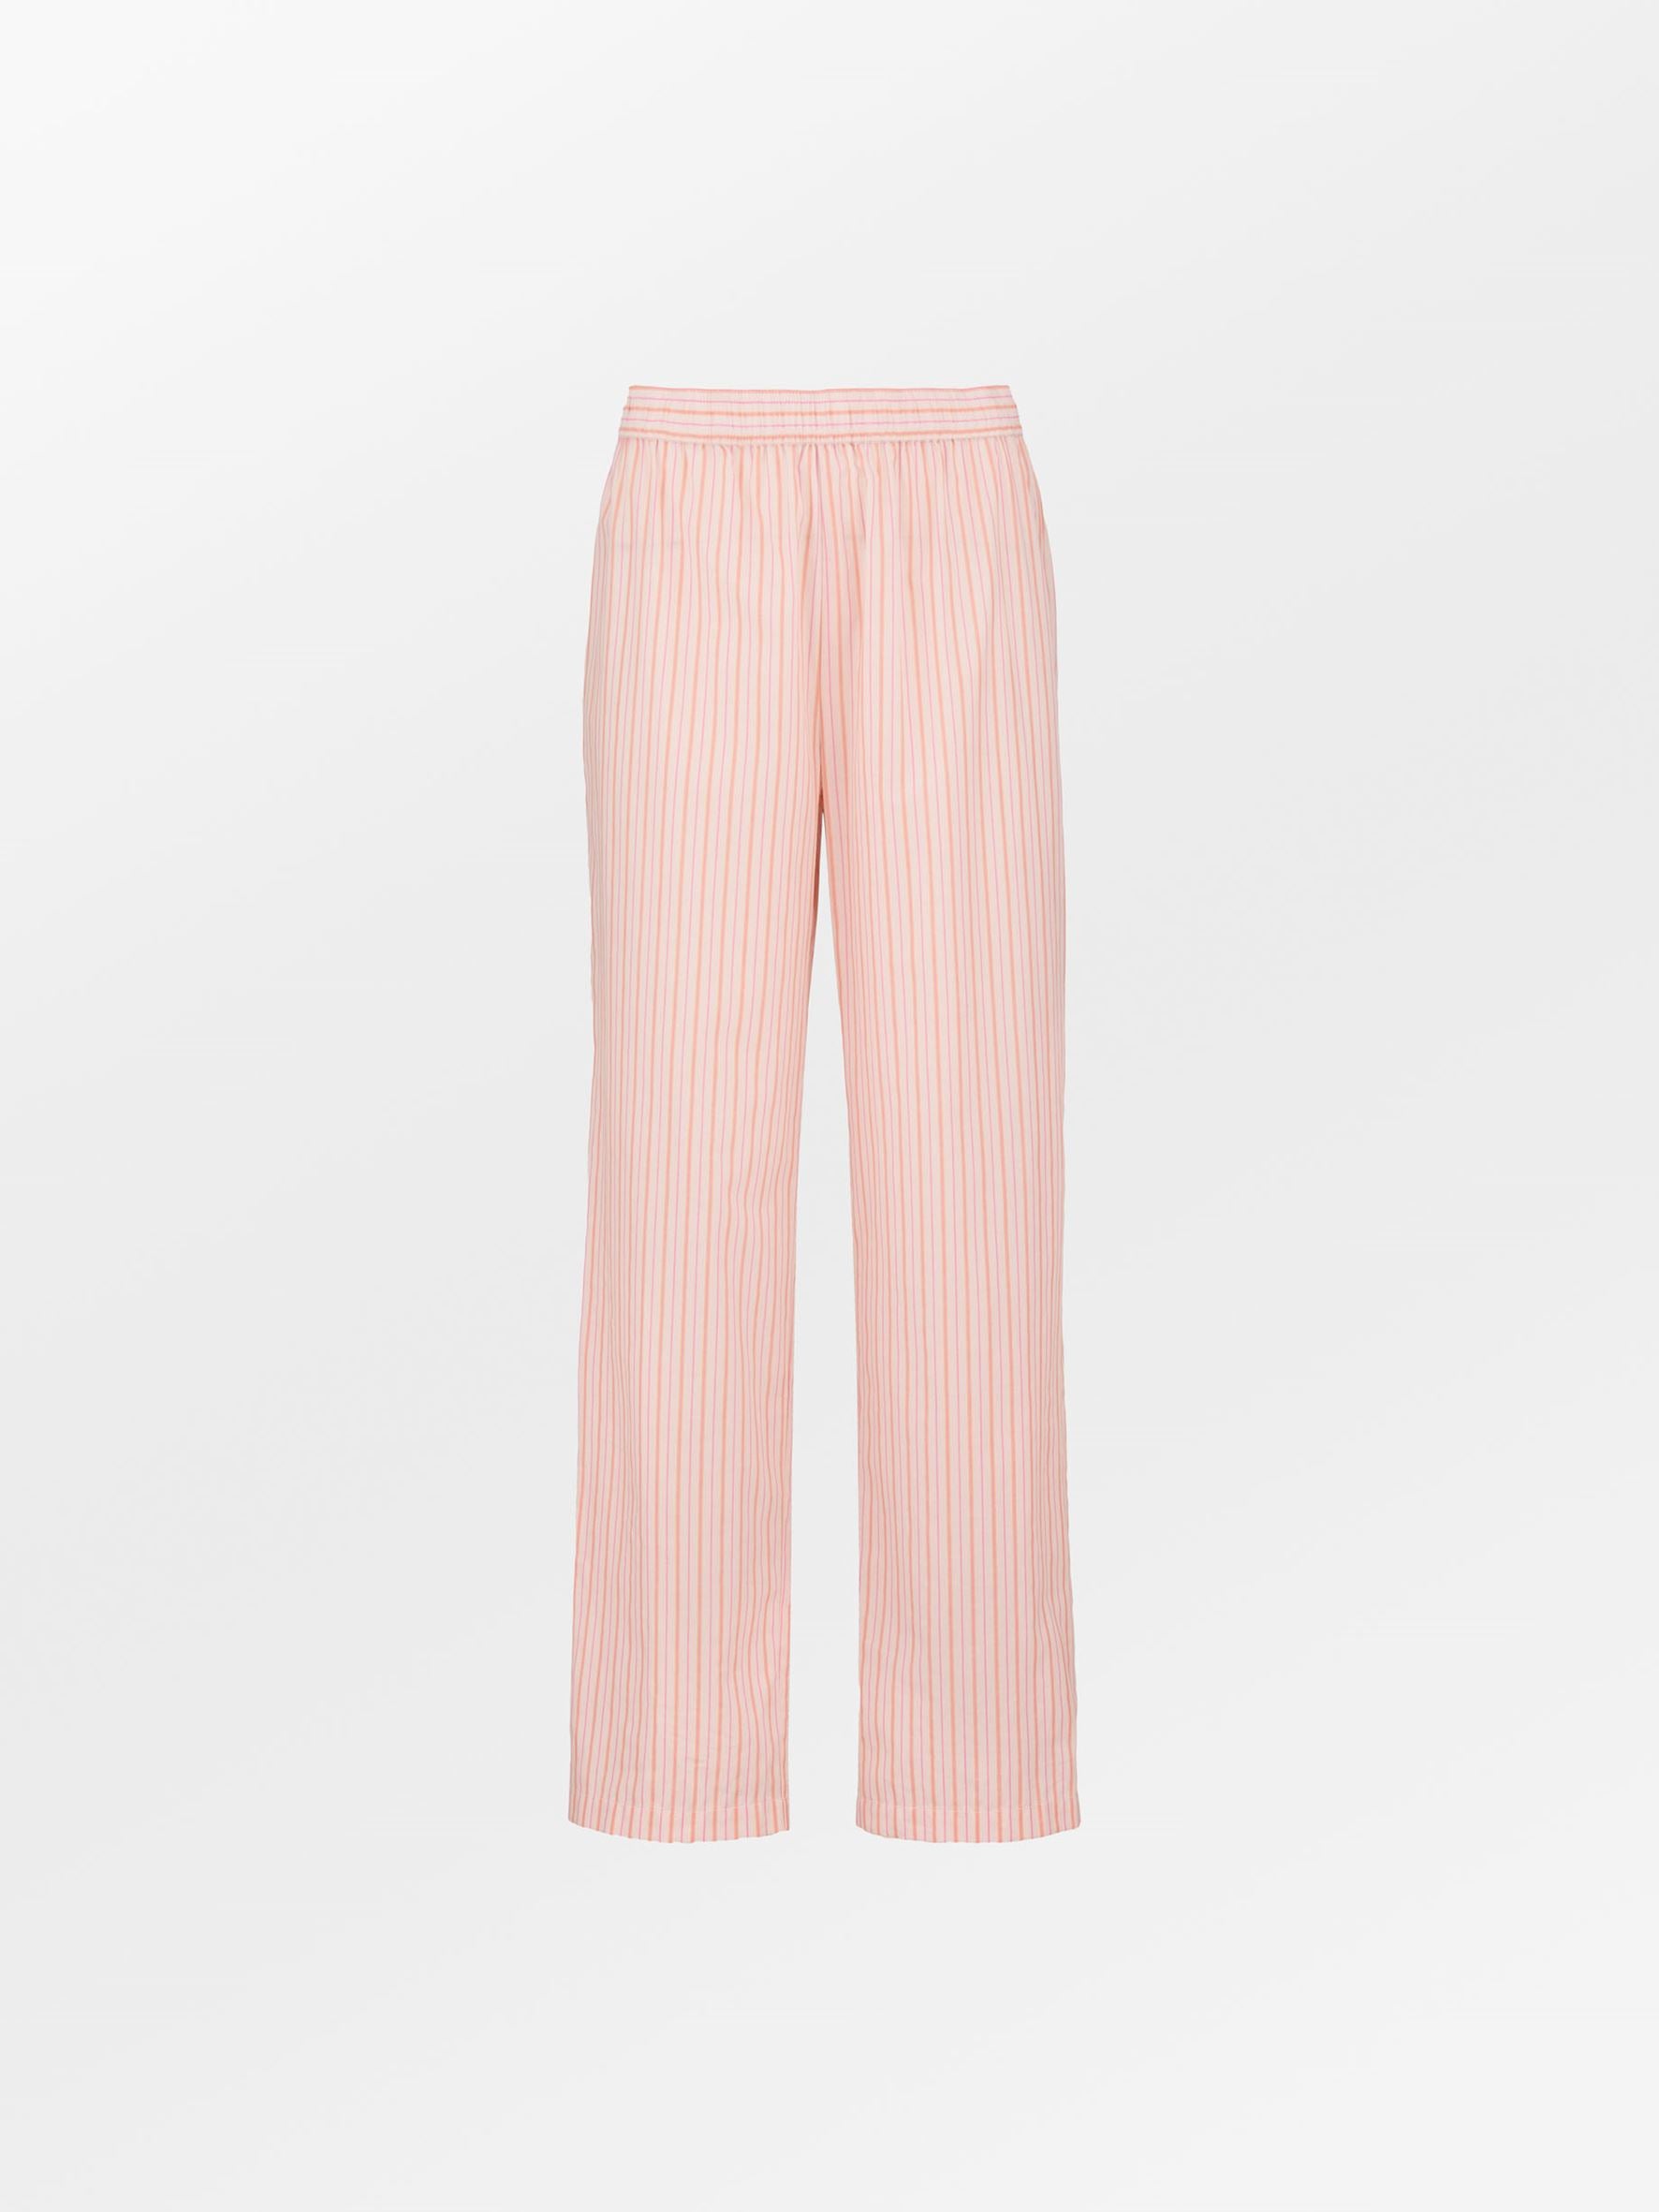 Stripel Pants - Pink Clothing   - Becksöndergaard